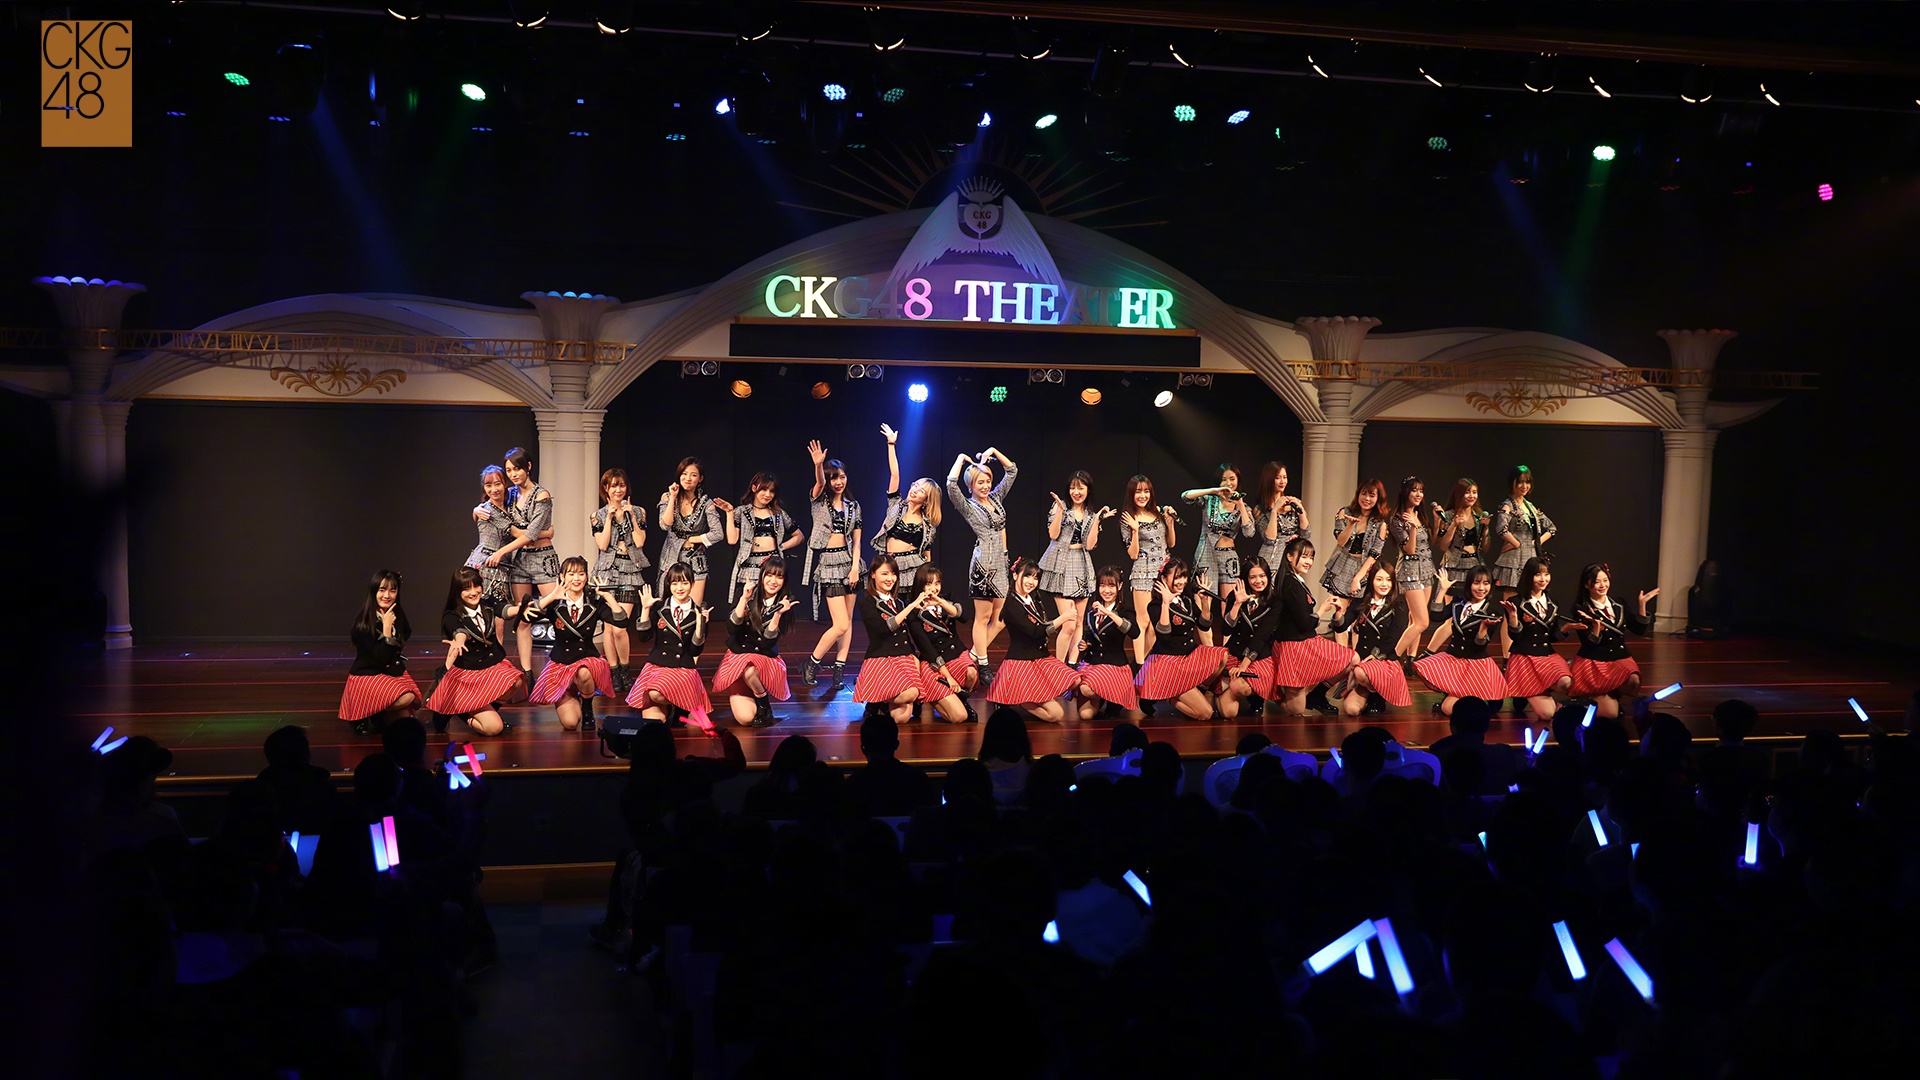 snh48 【s队重庆巡演回顾】今晚,s队重庆巡演第一场在ckg48星梦剧院